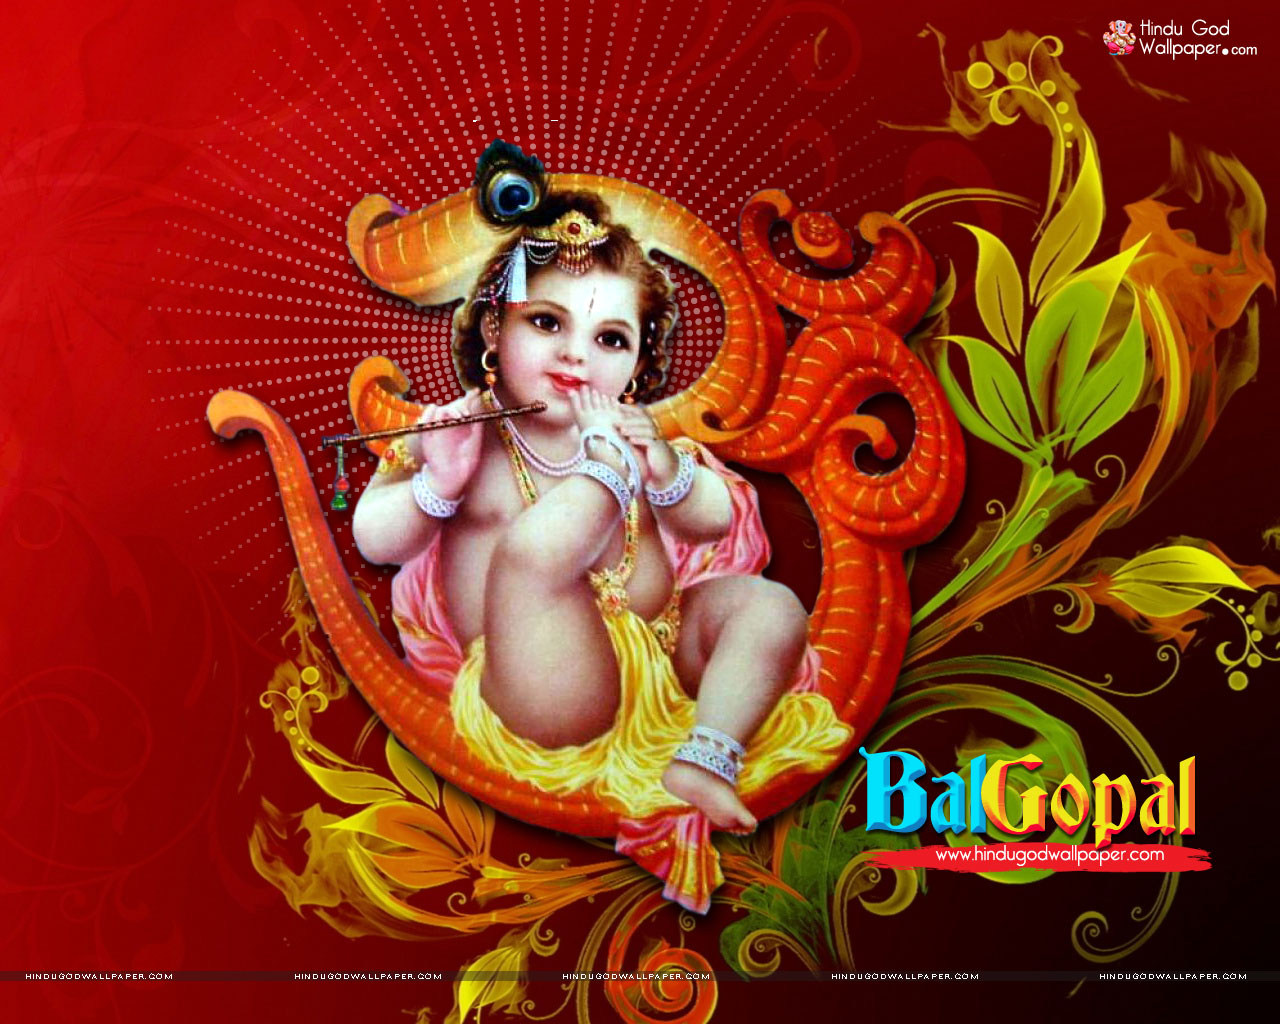 Shri Krishna Bal Gopal Wallpapers & Images Download